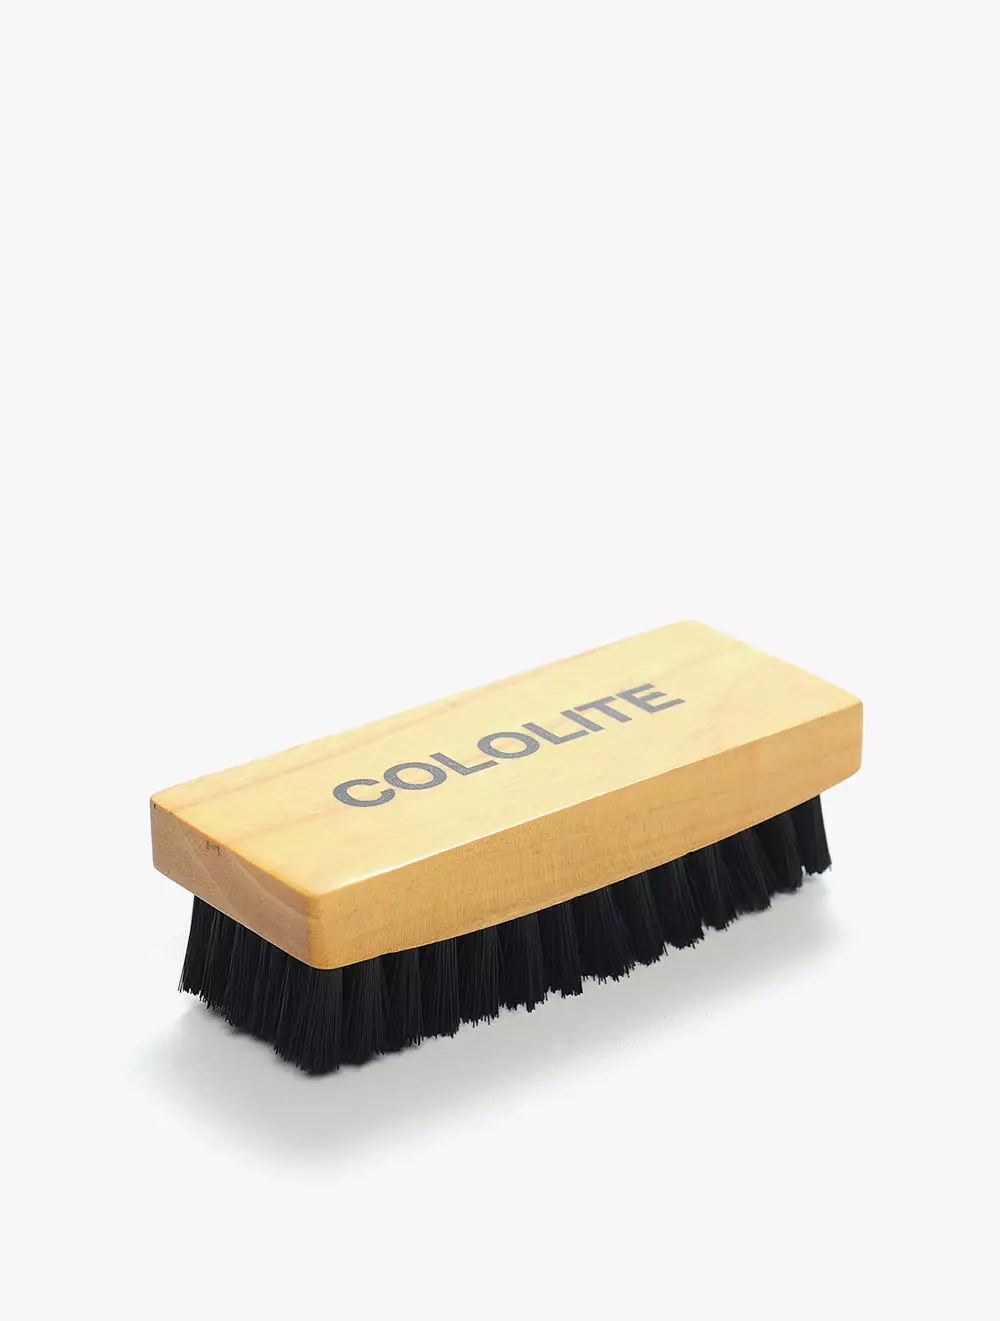 Payless Cololite Shoe Brush - Black_17 - Black